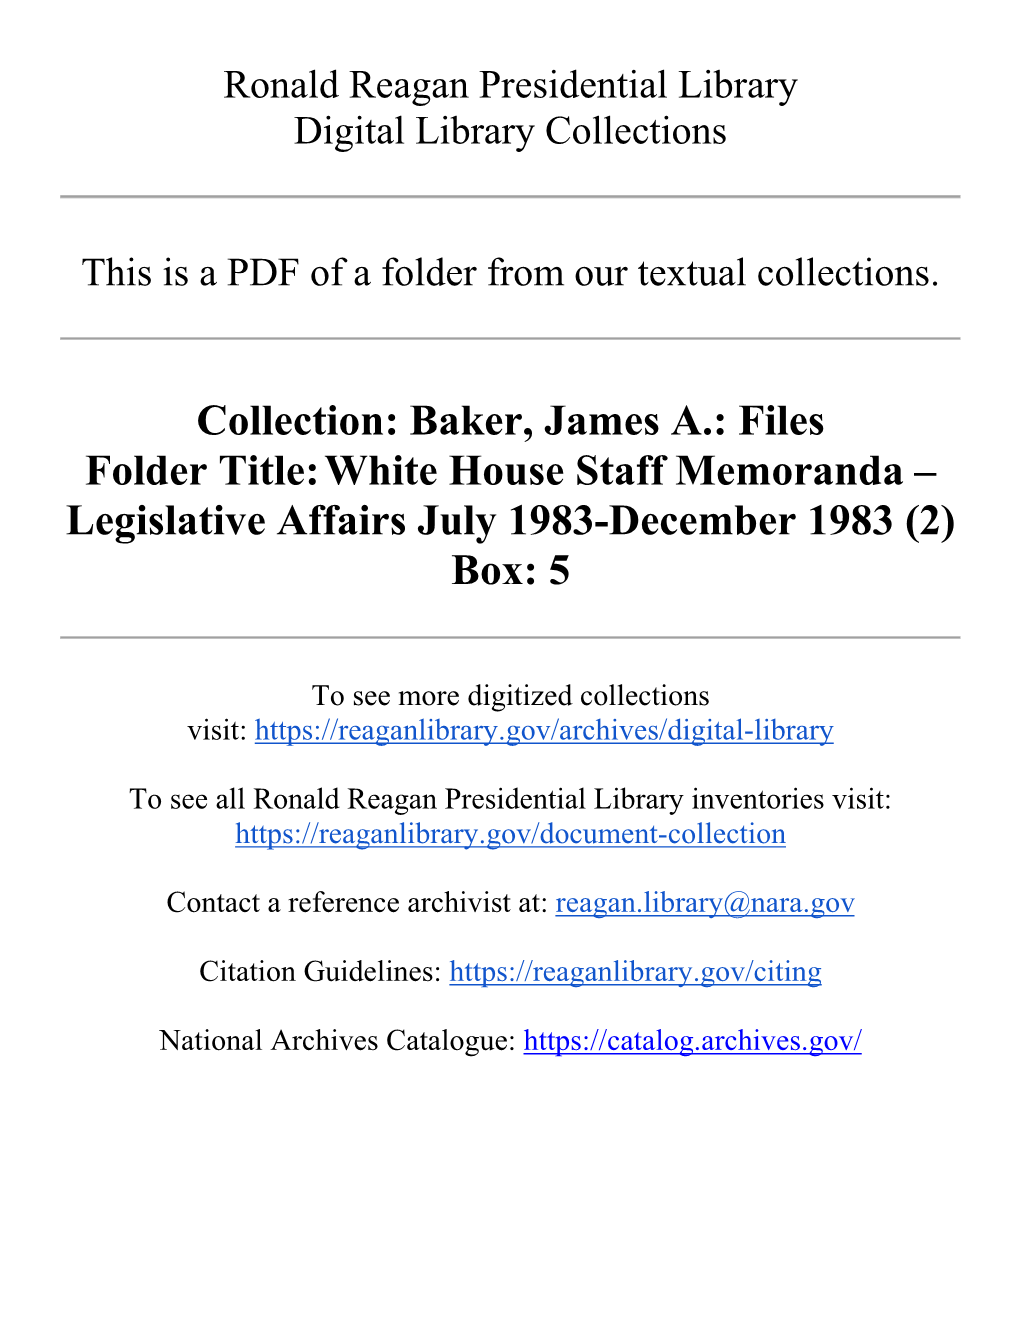 Baker, James A.: Files Folder Title: White House Staff Memoranda – Legislative Affairs July 1983-December 1983 (2) Box: 5